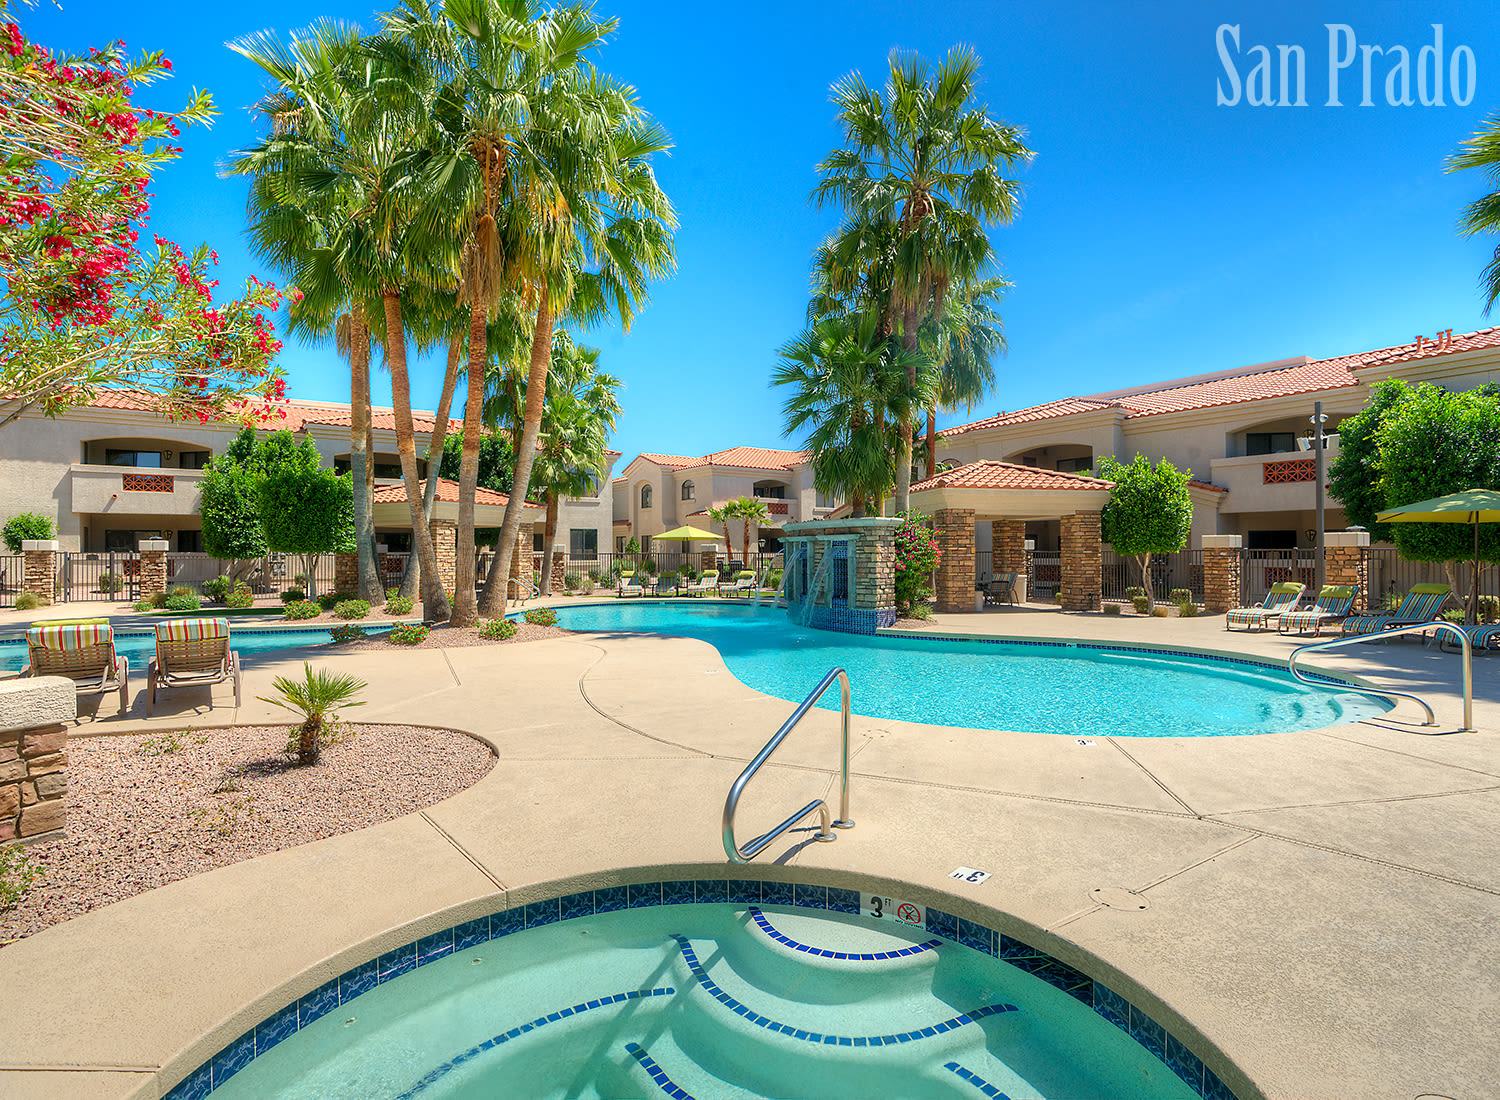 San Prado apartments in Glendale, Arizona